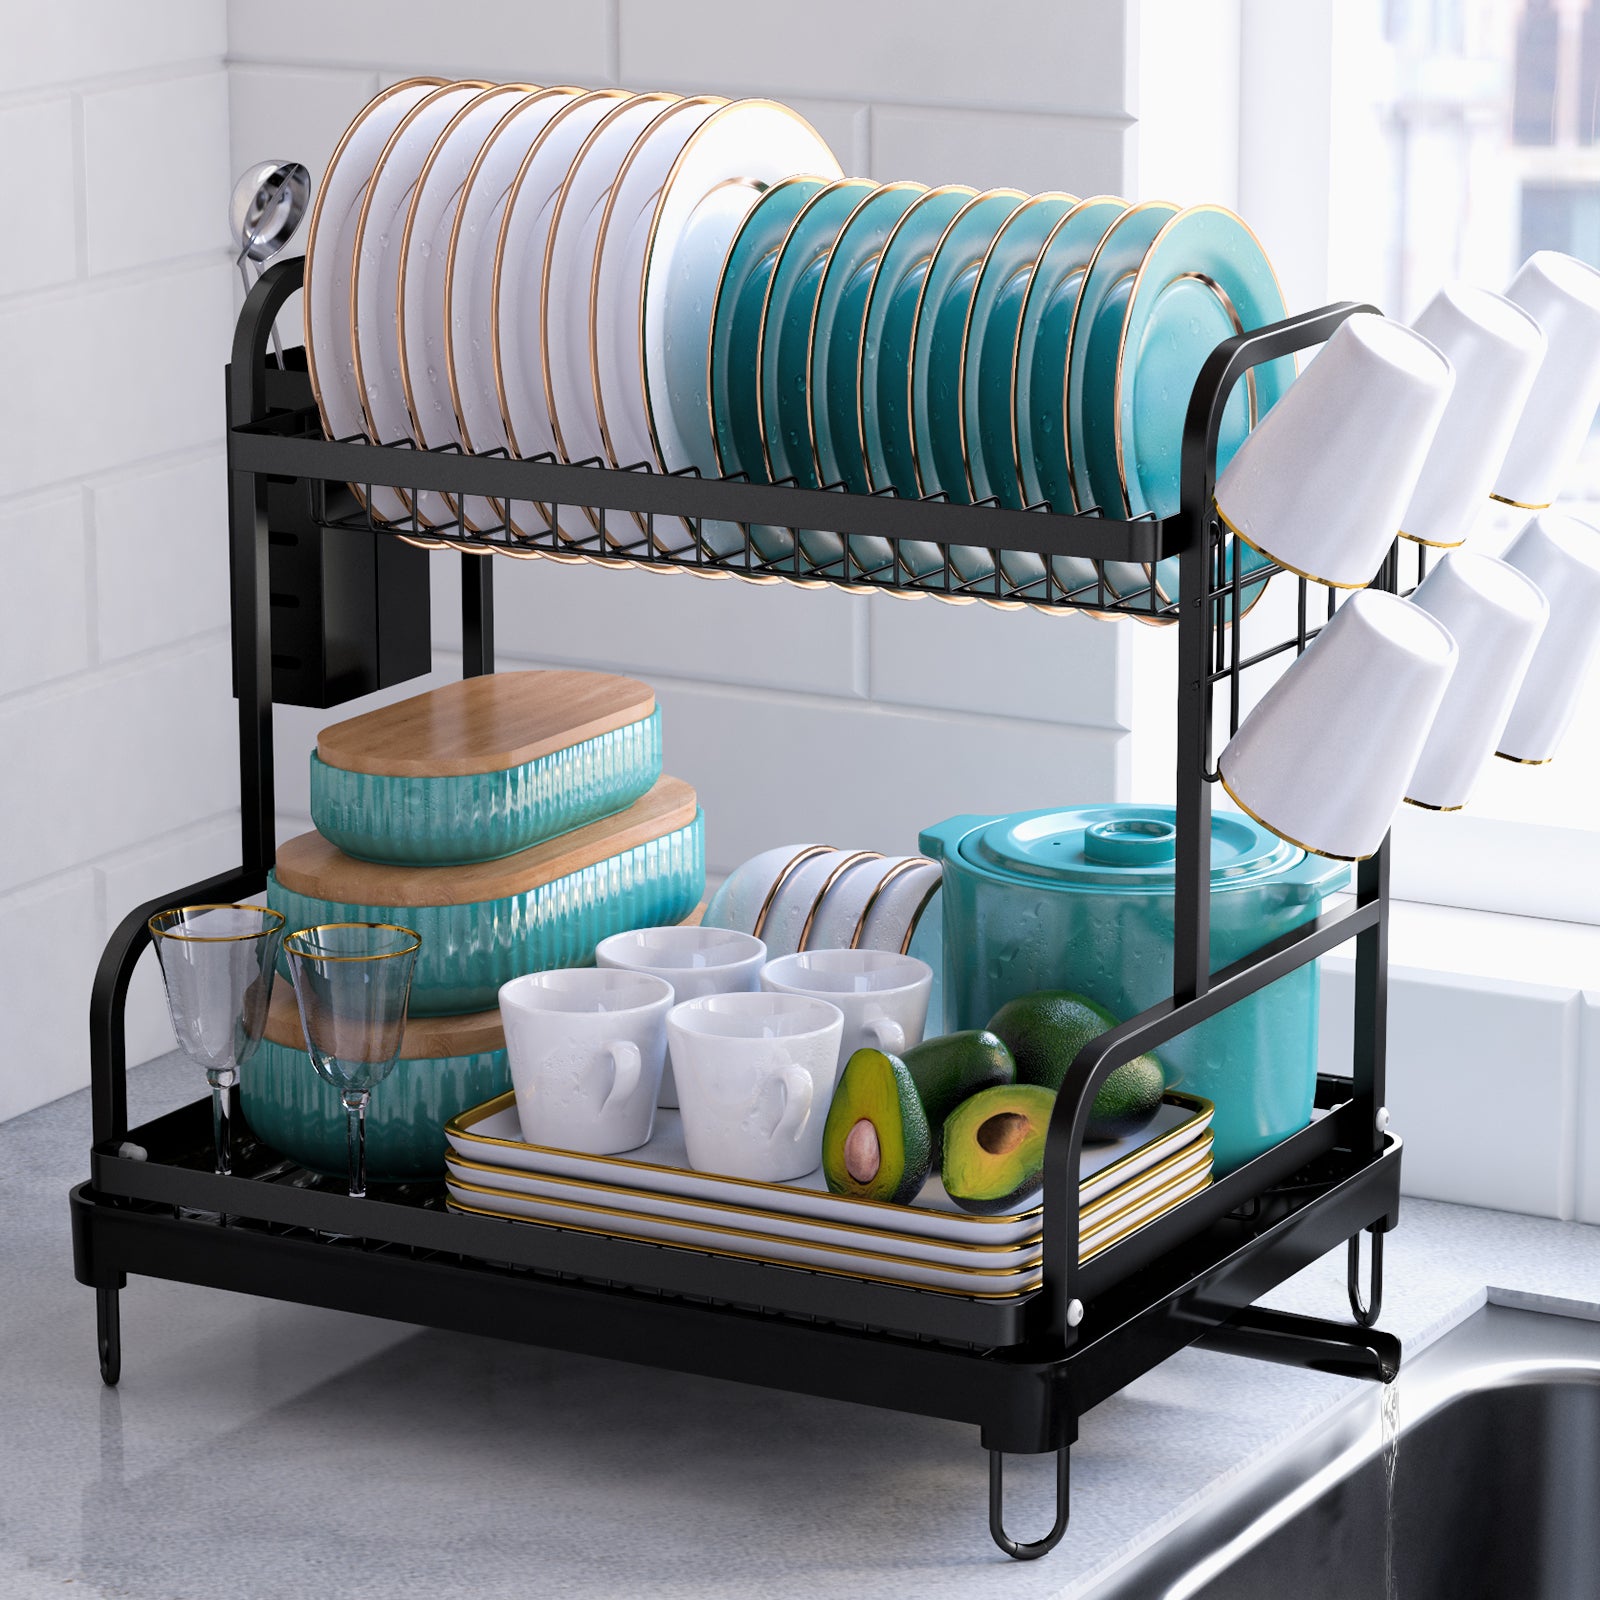 Kitsure Dish Drying Rack, Multifunctional Dish Rack, Rustproof Kitchen Dish  Drying Rack with Drainboard, Space-Saving 2-Tier Dish Drying Rack for